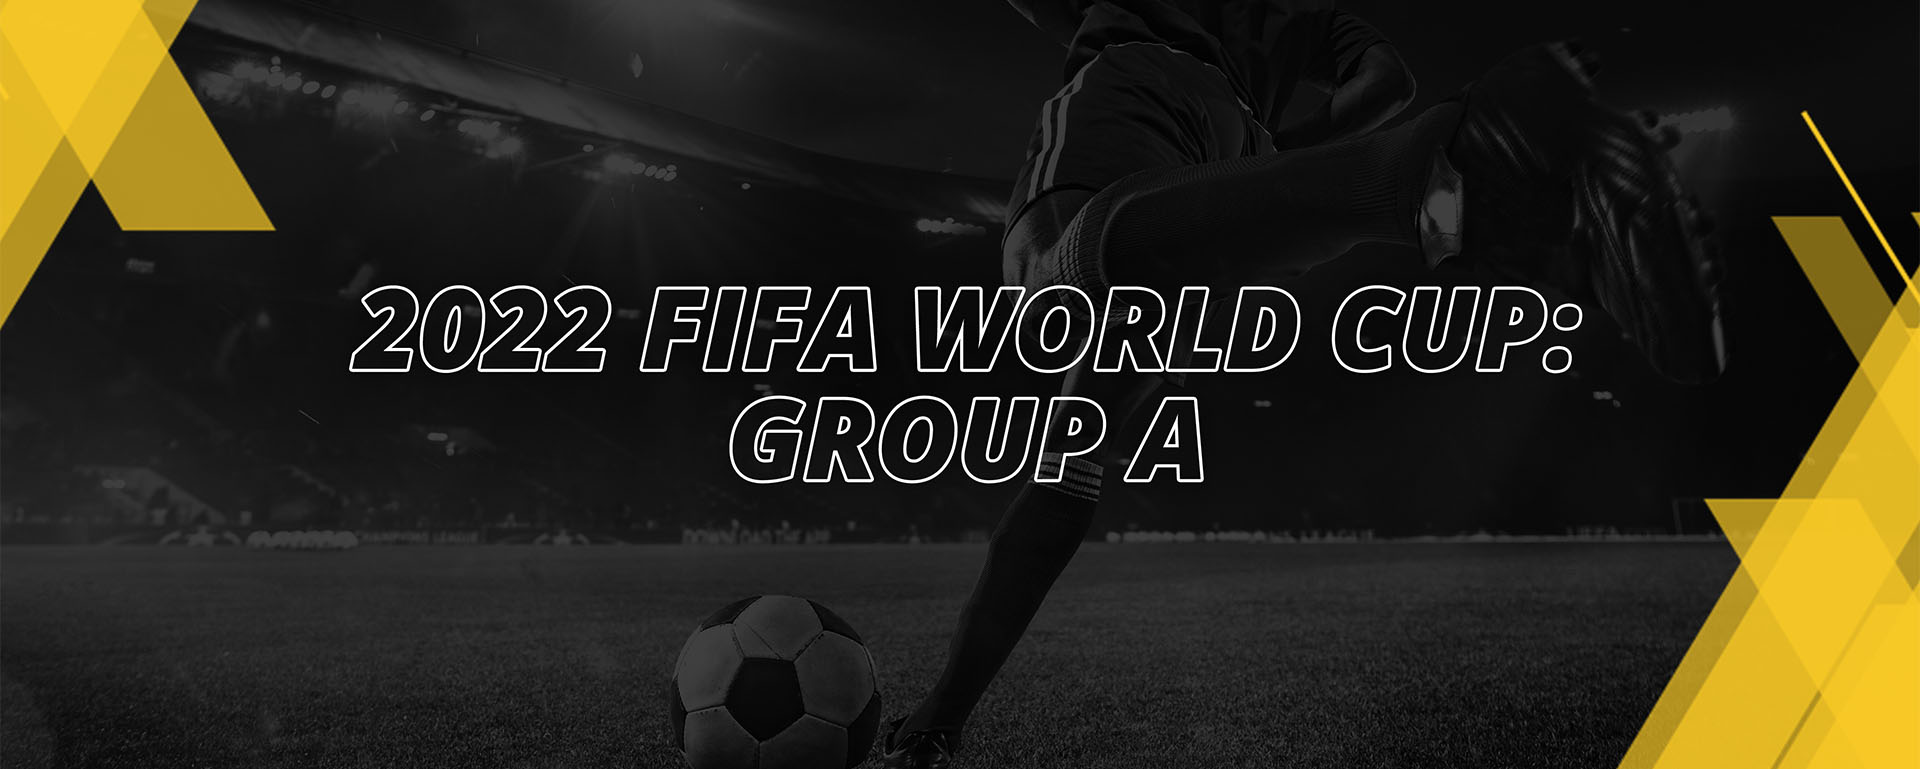 FIFA WORLD CUP 2022 GROUP A | QATAR 2022